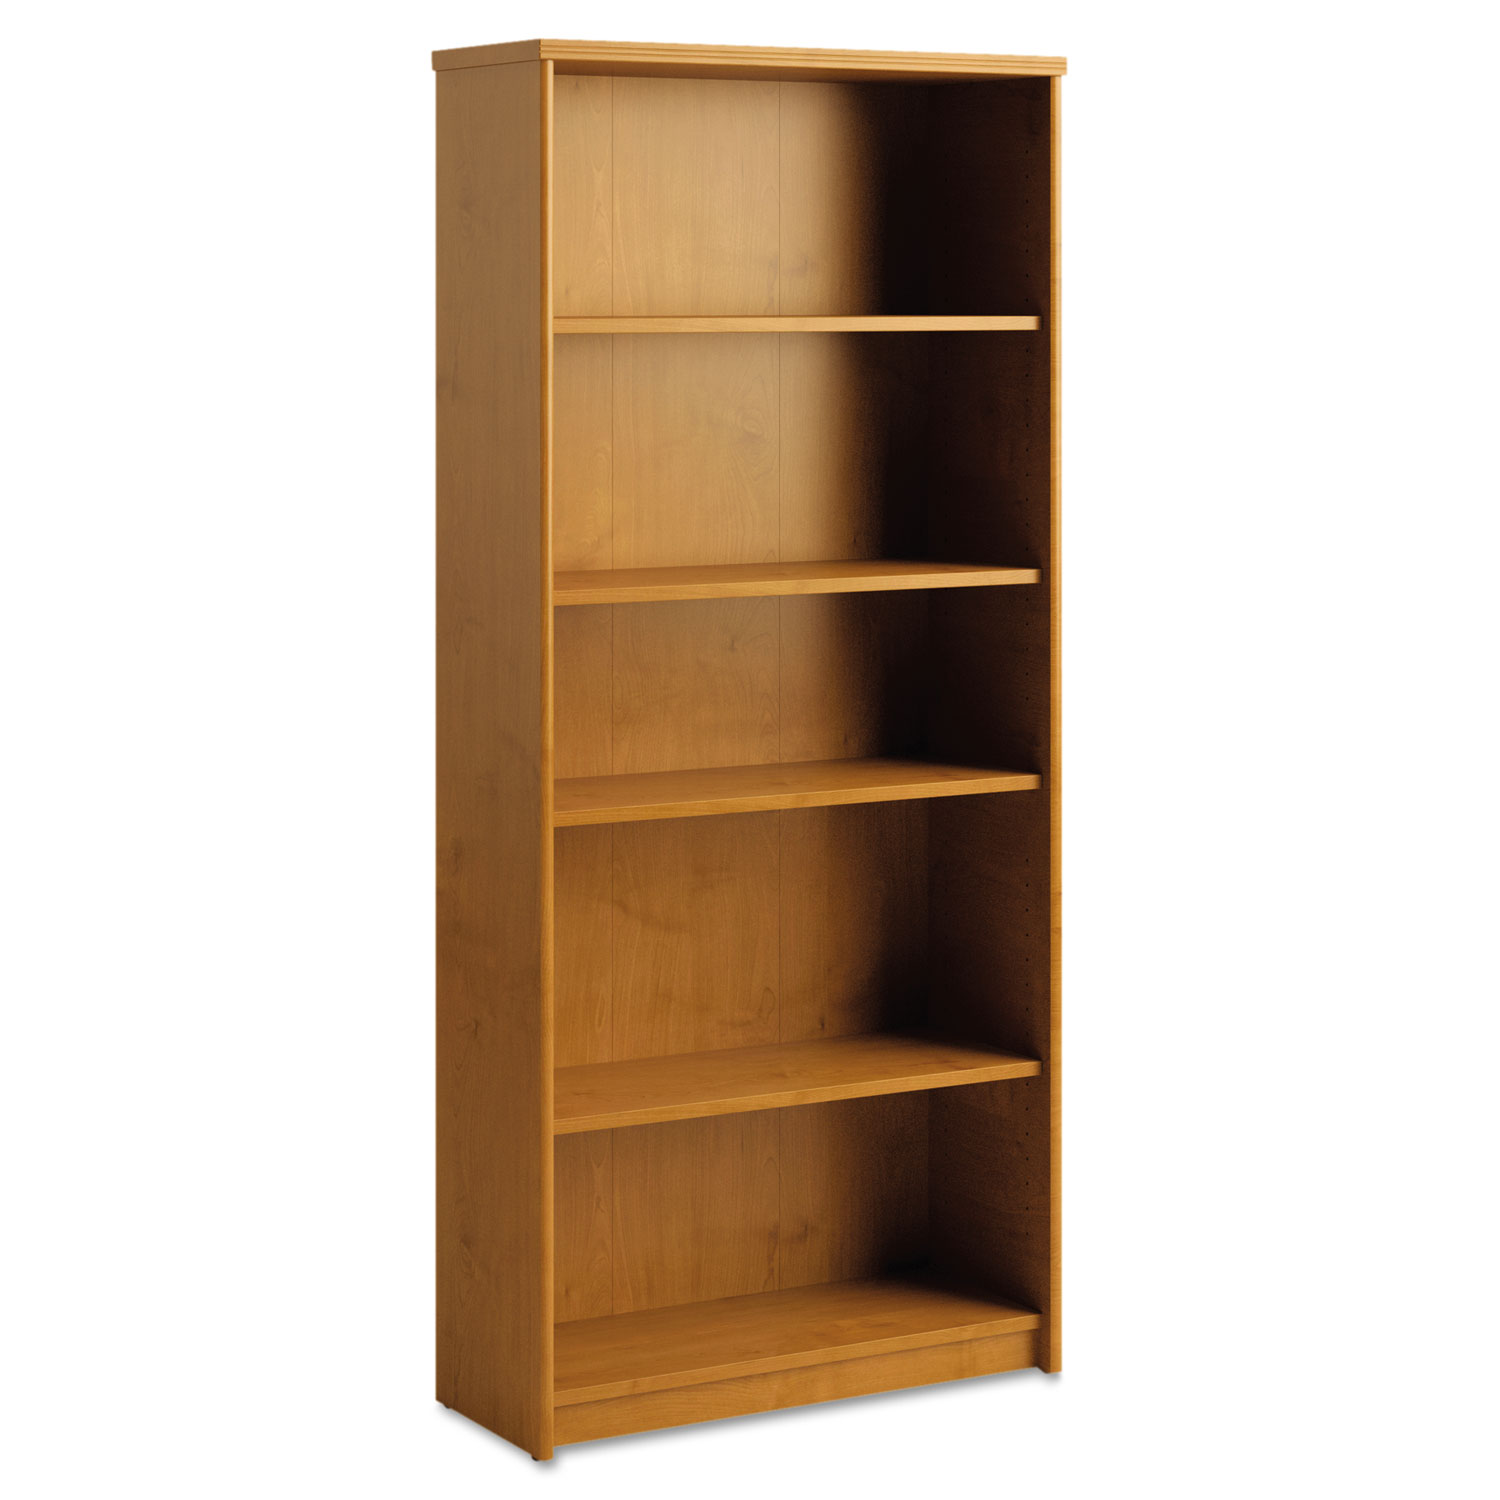 Envoy Series Five-Shelf Bookcase, 29 7/8w x 11 3/4d x 66 3/8h, Natural Cherry